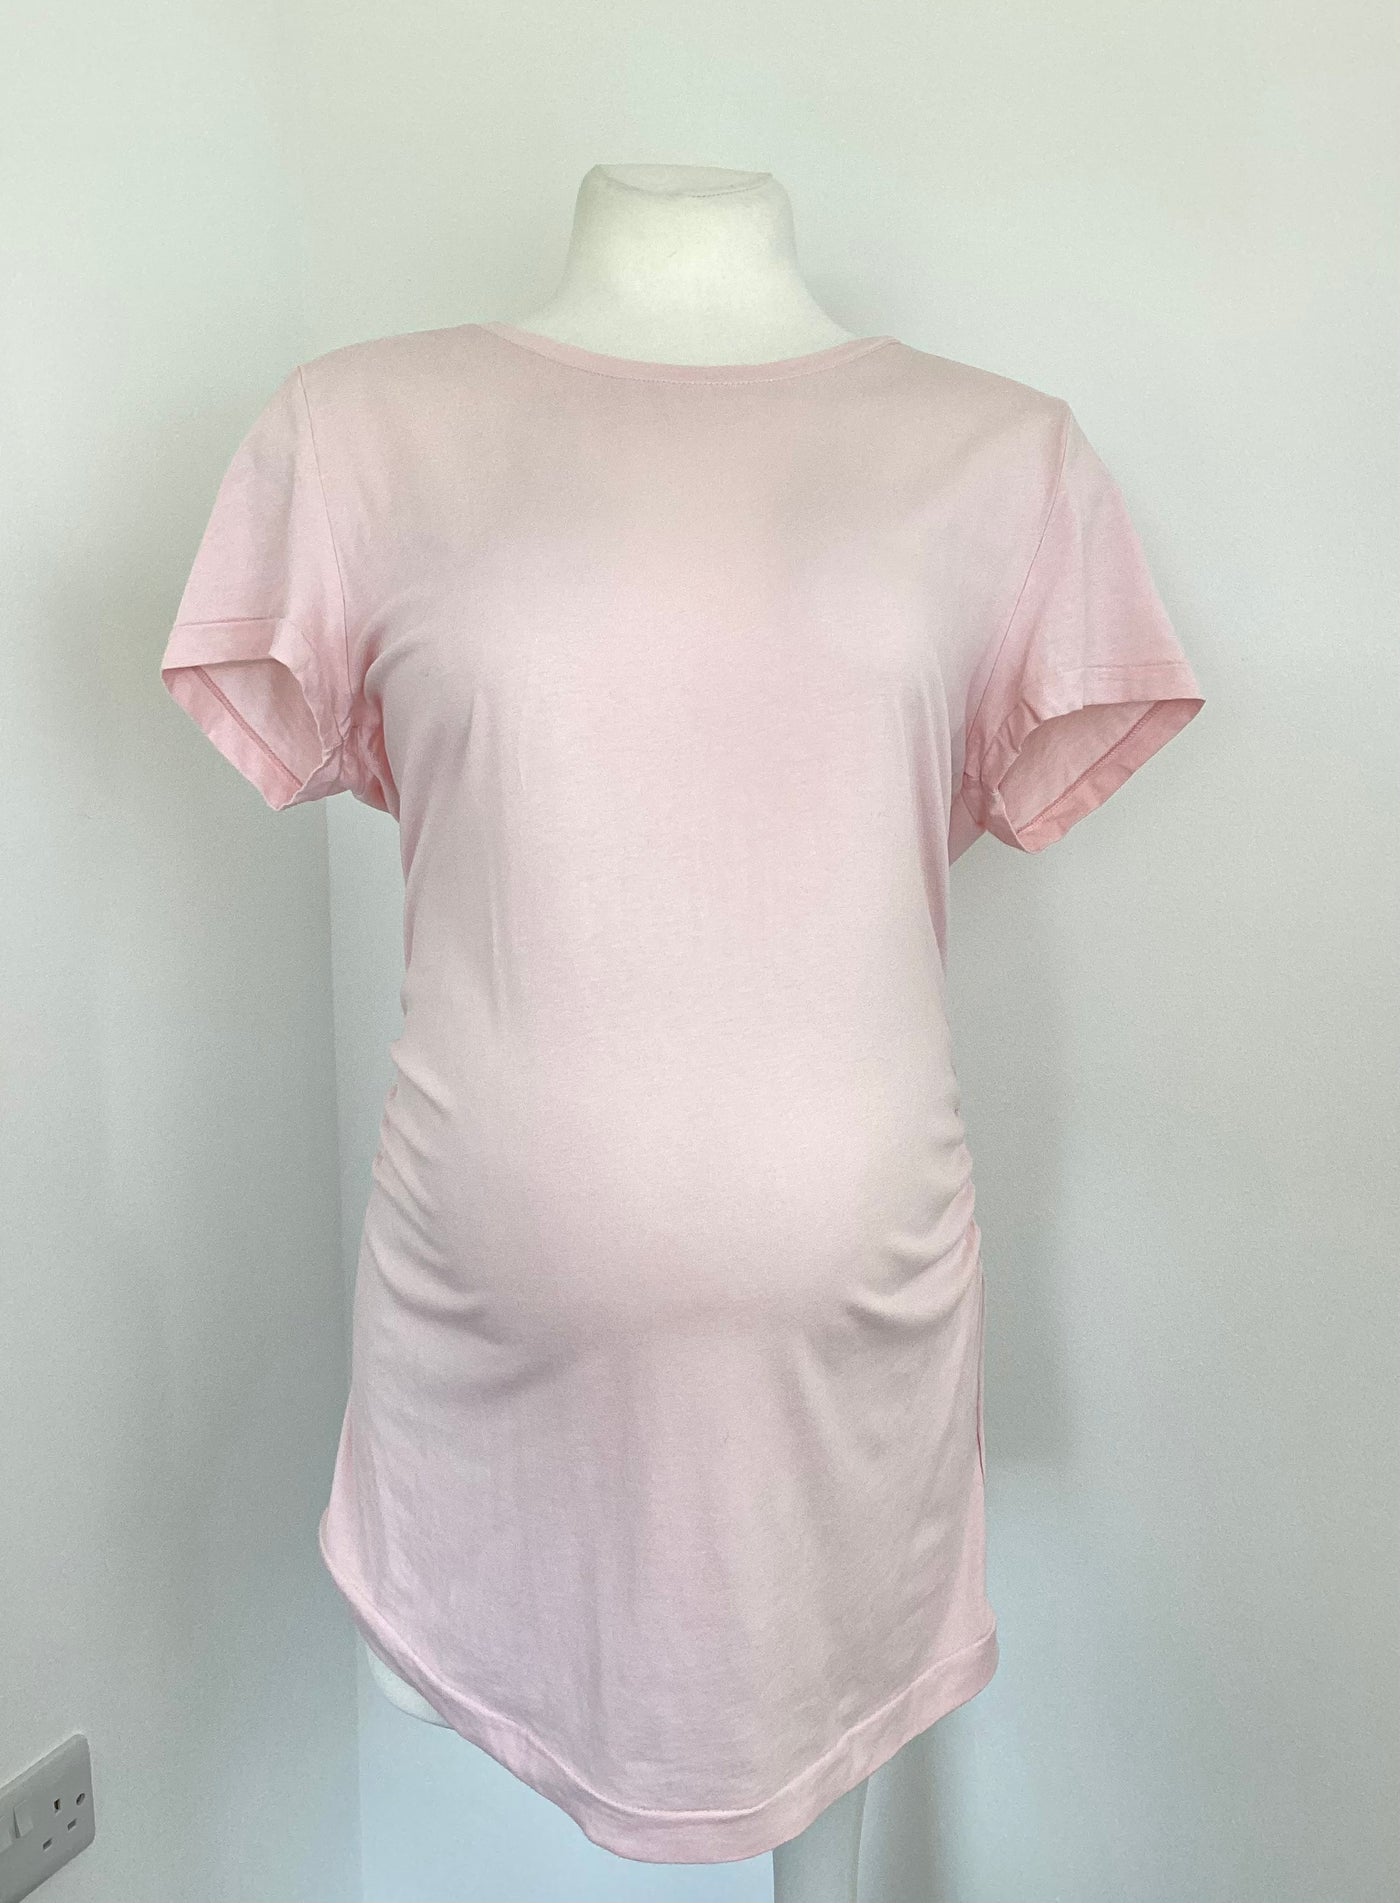 Gap Maternity light pink stretch top - Size XL (Approx UK 14/16)